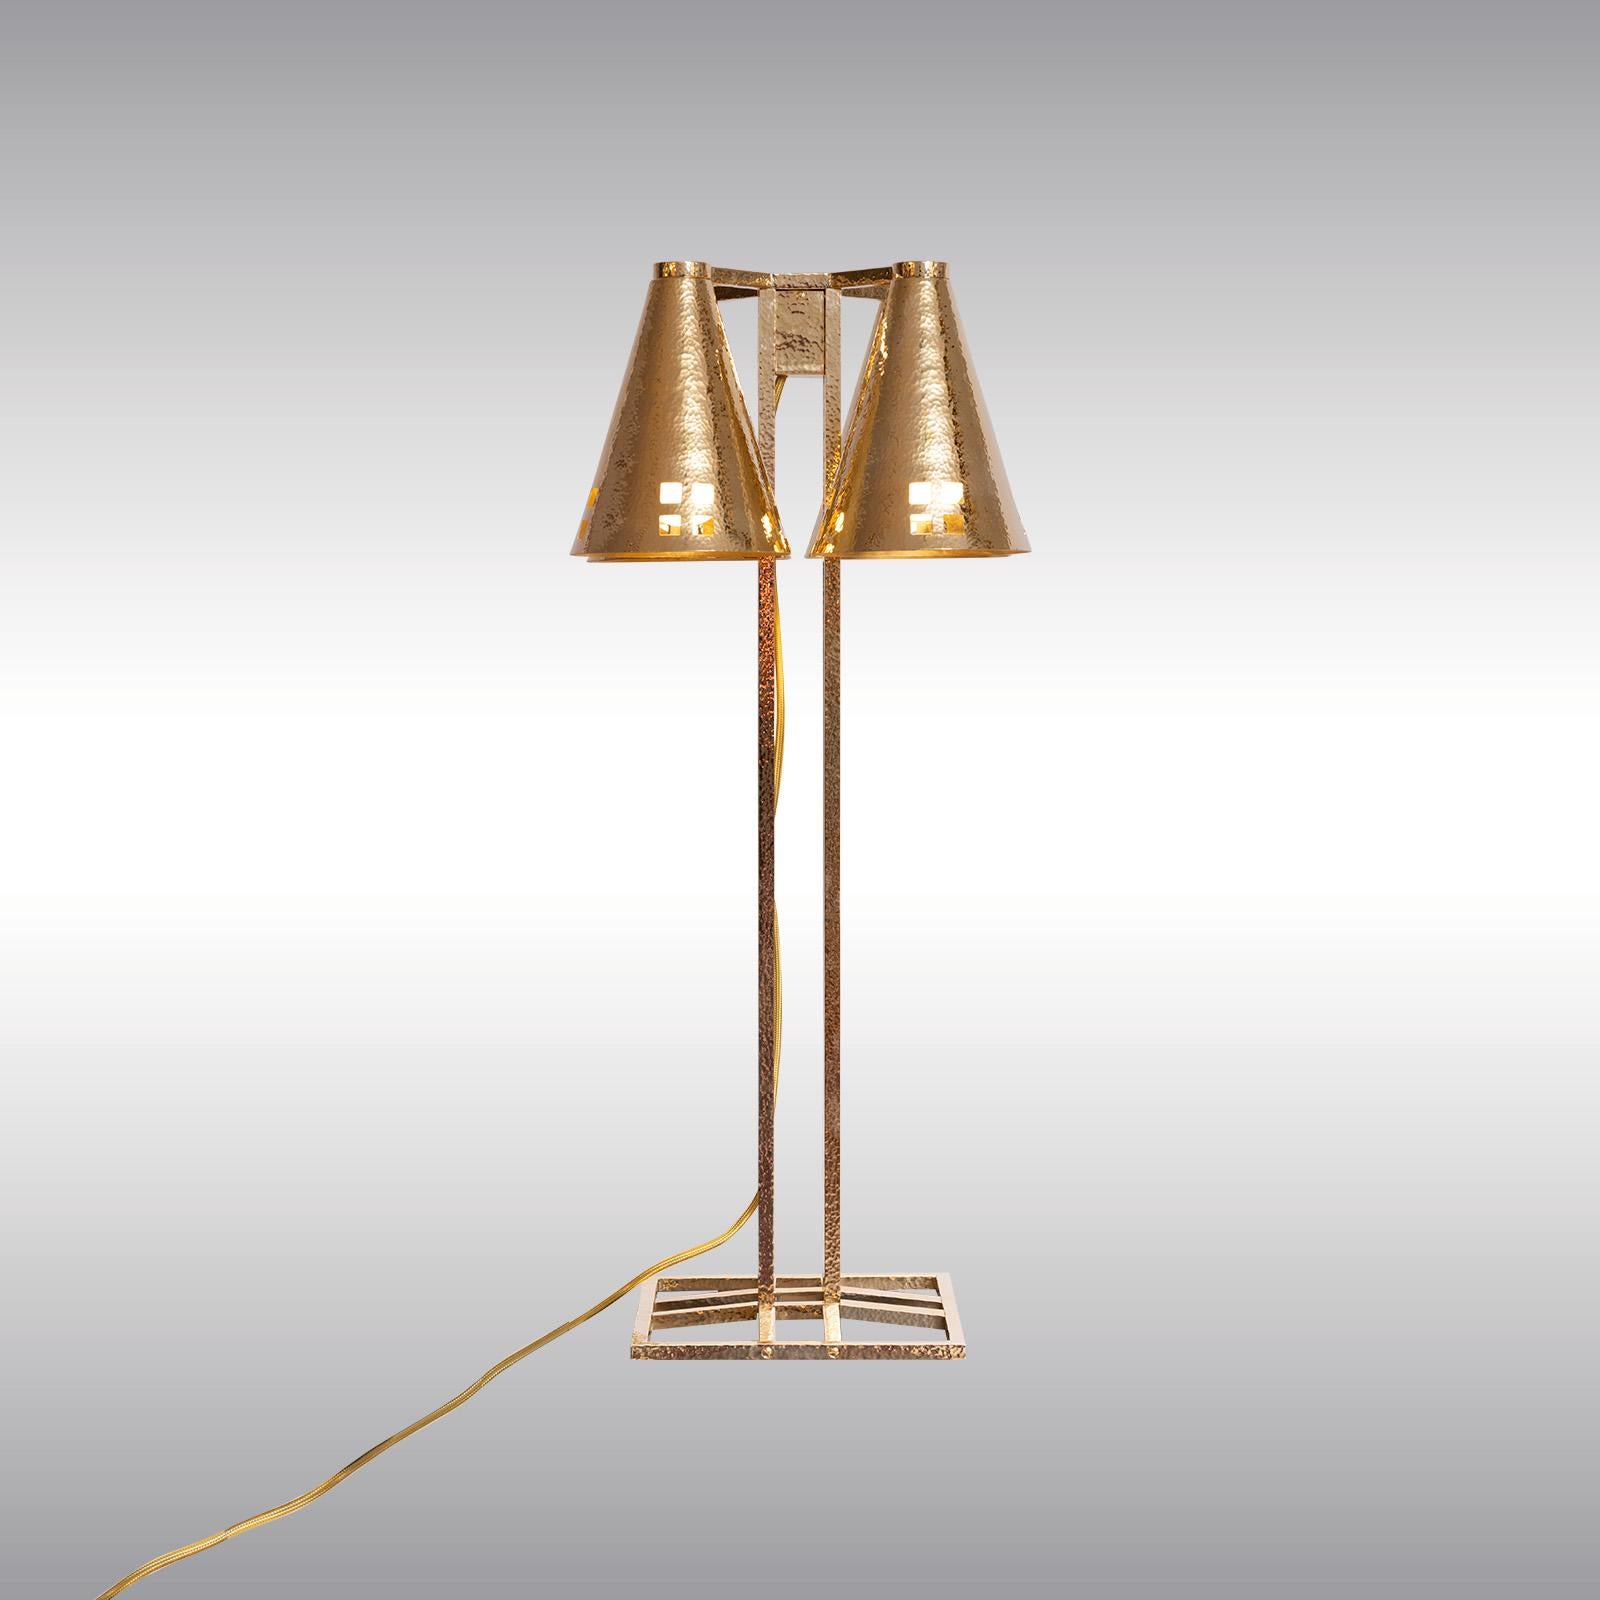 Vienna Secession Cubistic Josef Hoffmann / Wiener Werkstätte Table Lamp, Re Edition For Sale